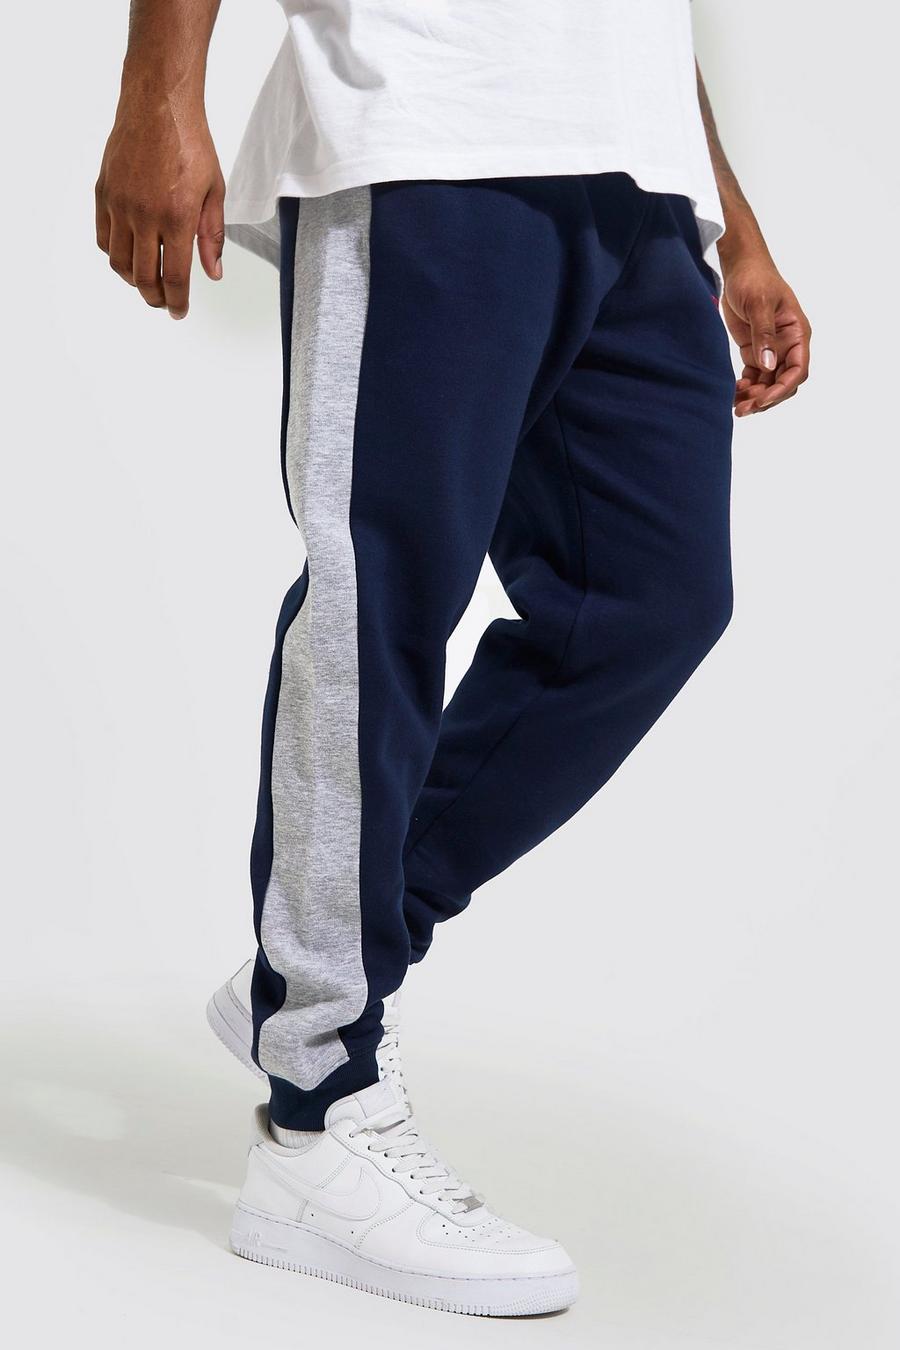 Pantaloni tuta Plus Size Offcl Skinny Fit con pannelli laterali, Navy blu oltremare